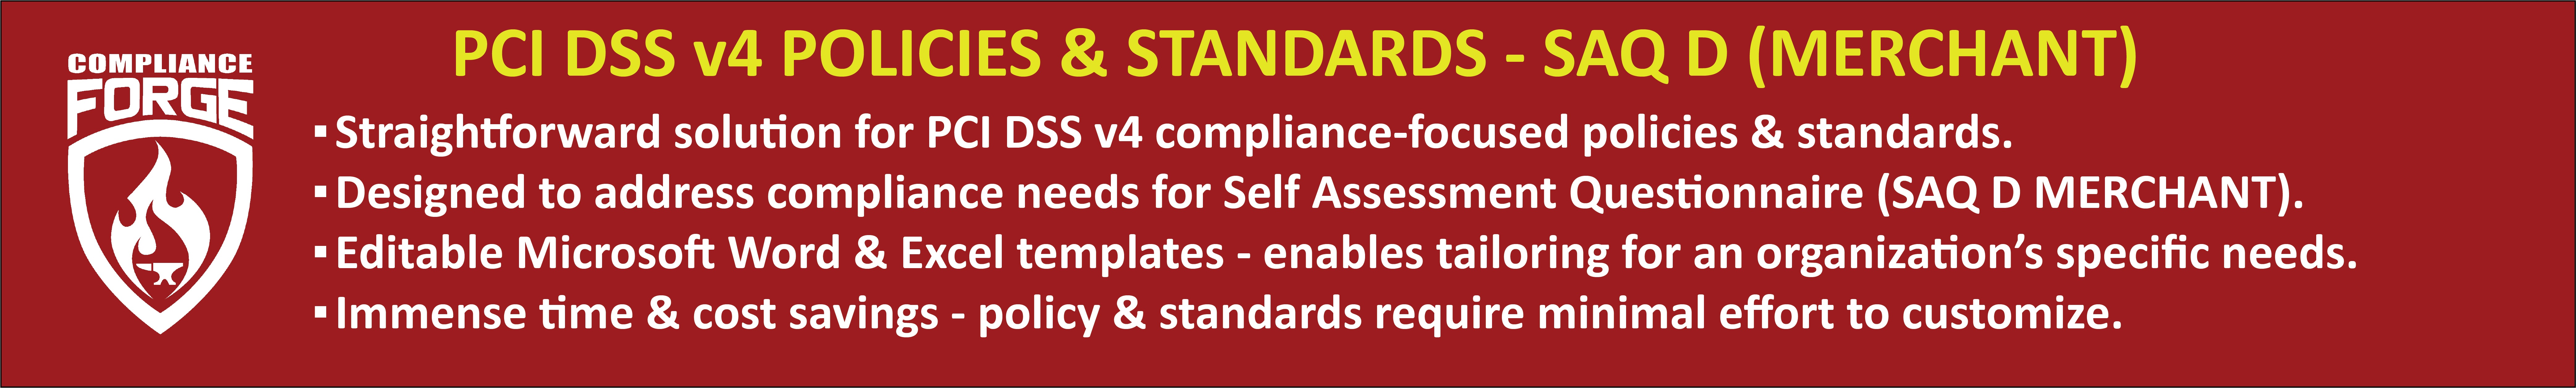 PCI DSS v4 SAQ D Merchant policies and standards example